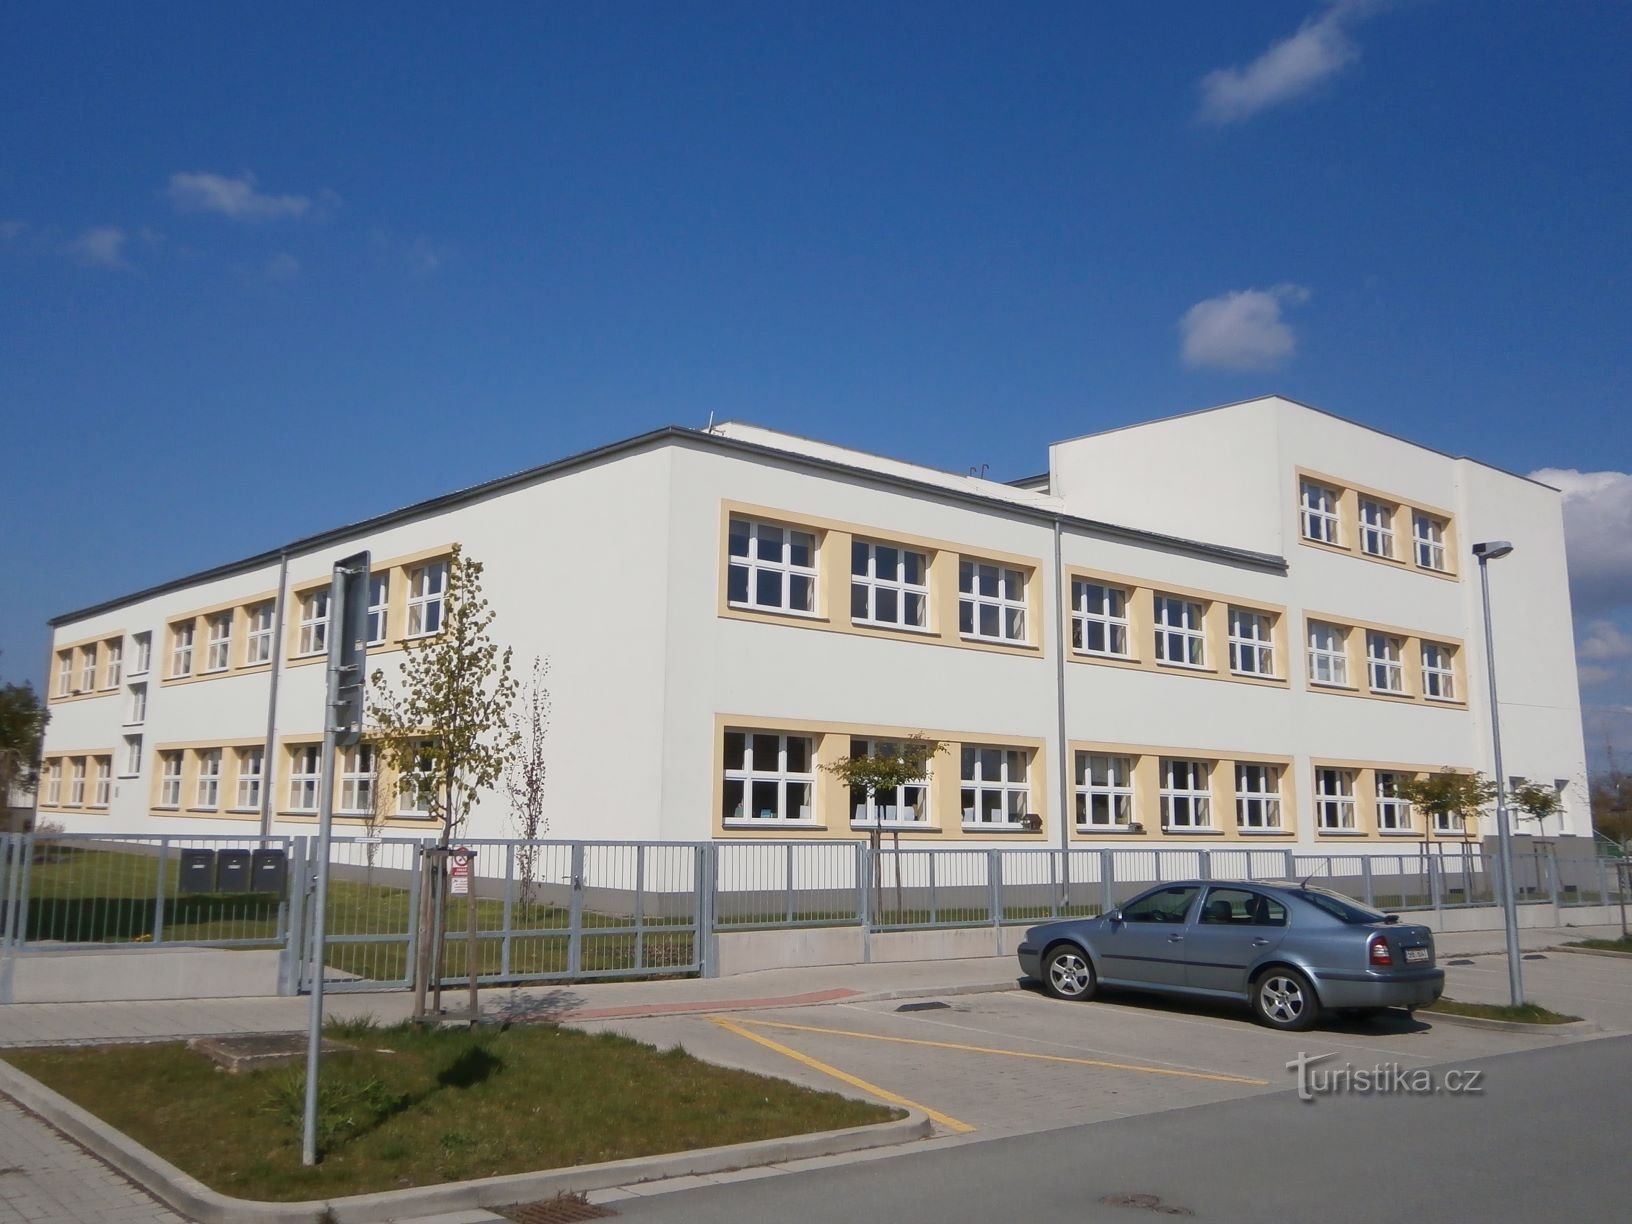 Vue latérale de l'école du jubilé de Masaryk (Černilov, 30.4.2017/XNUMX/XNUMX)